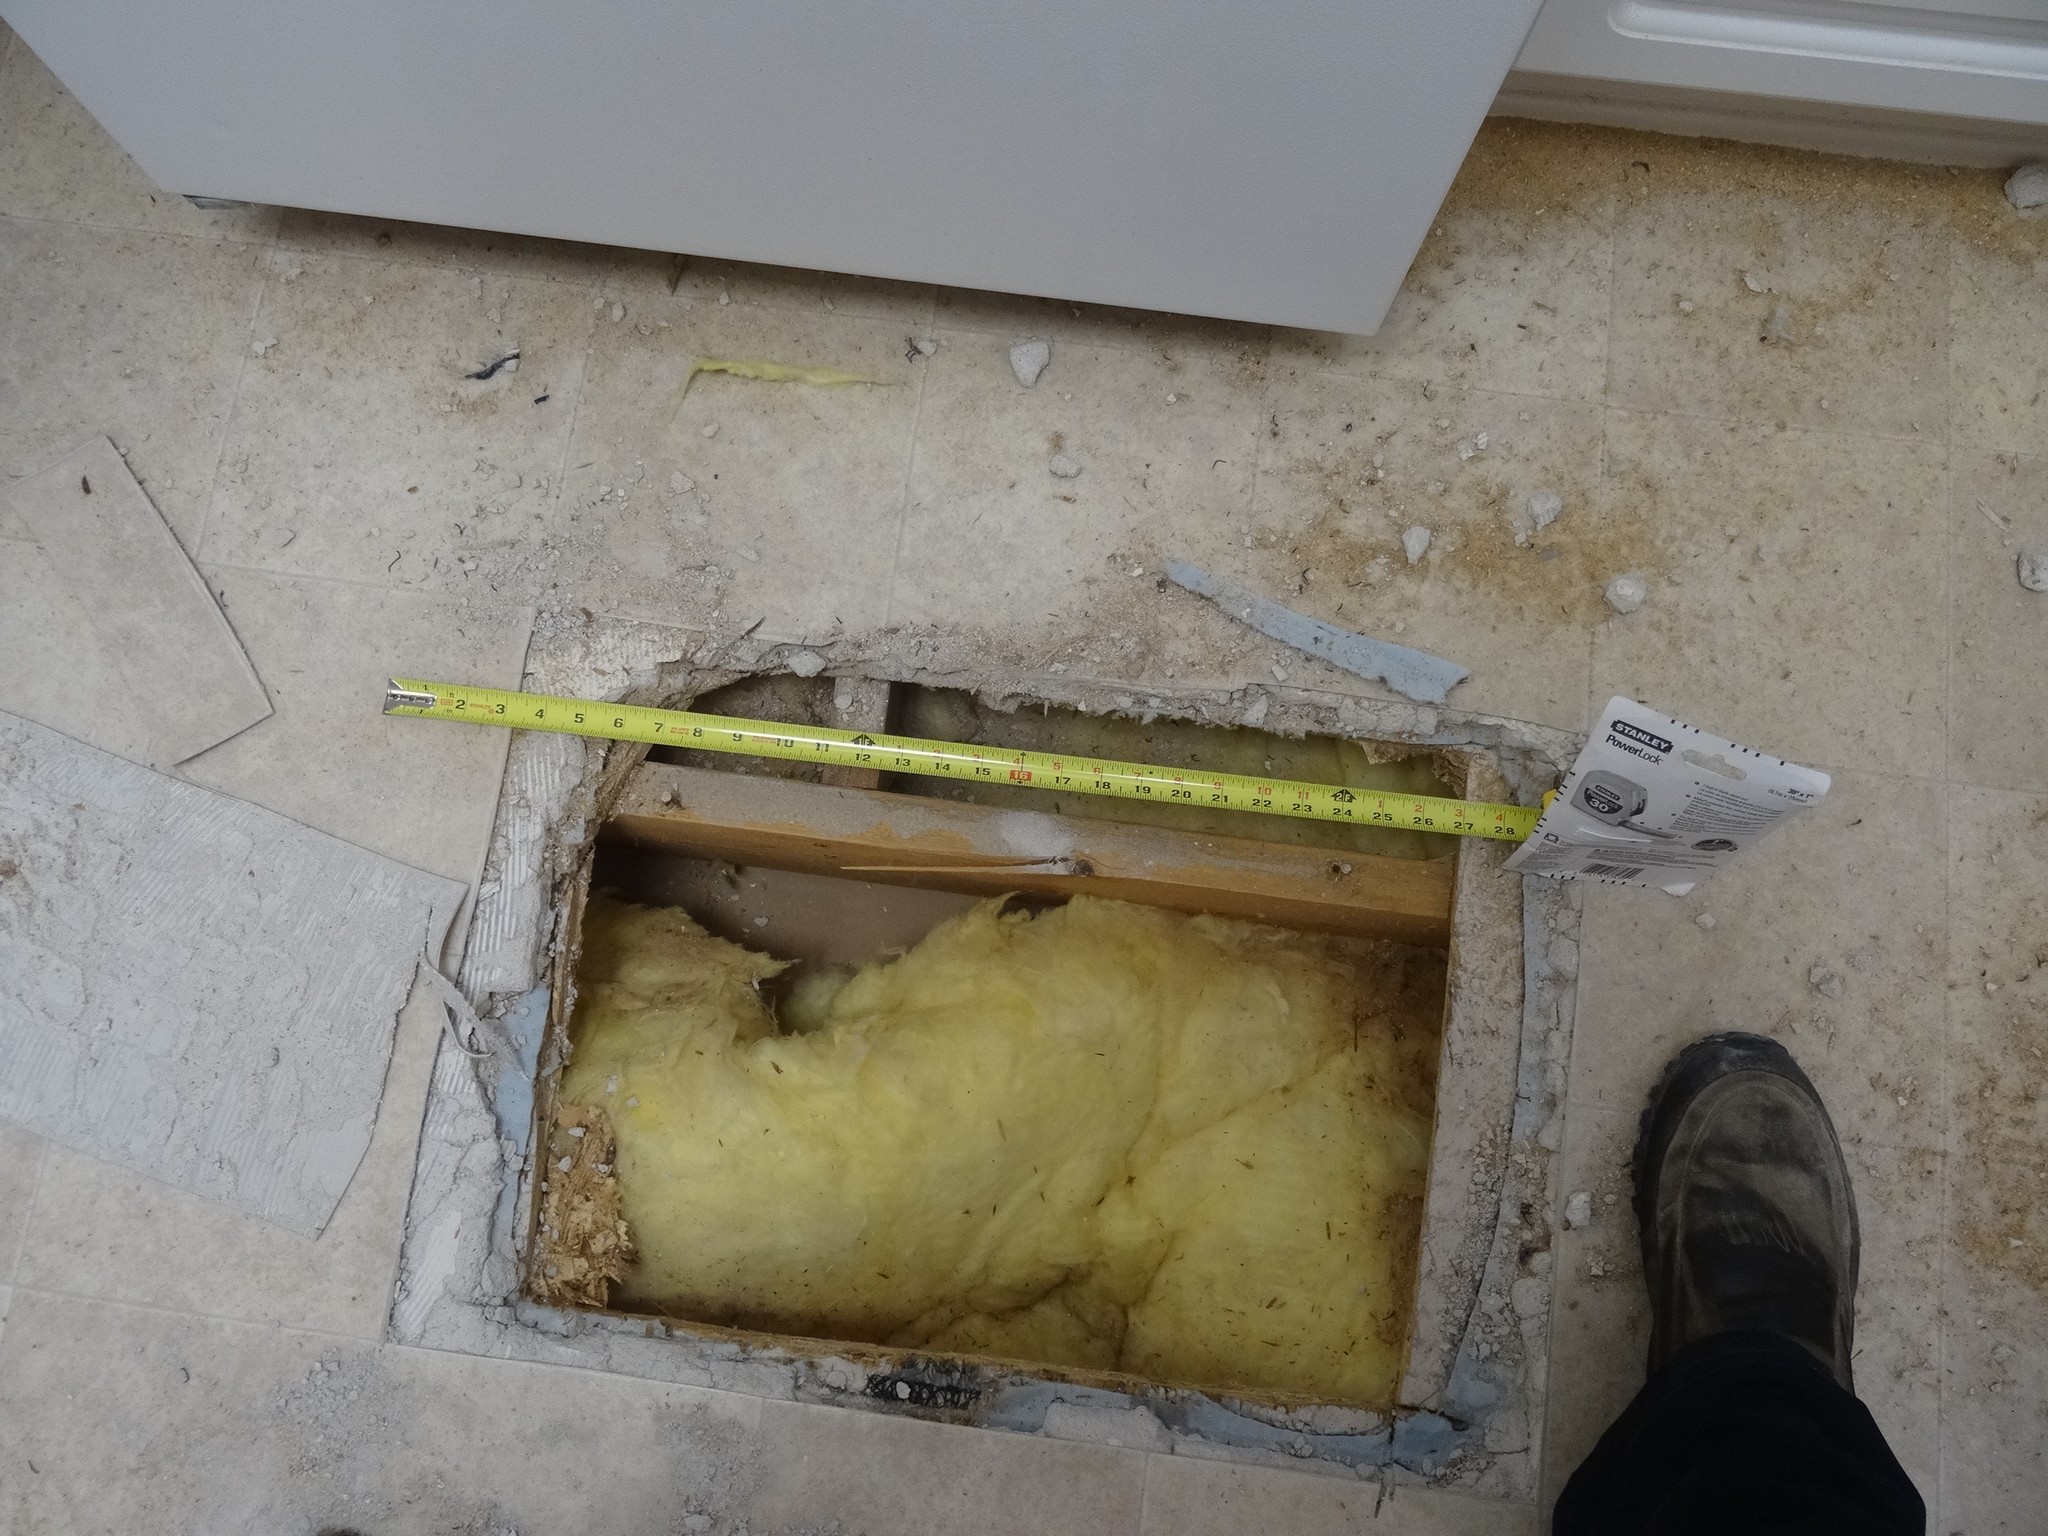 Examination of framing beneath the subfloor